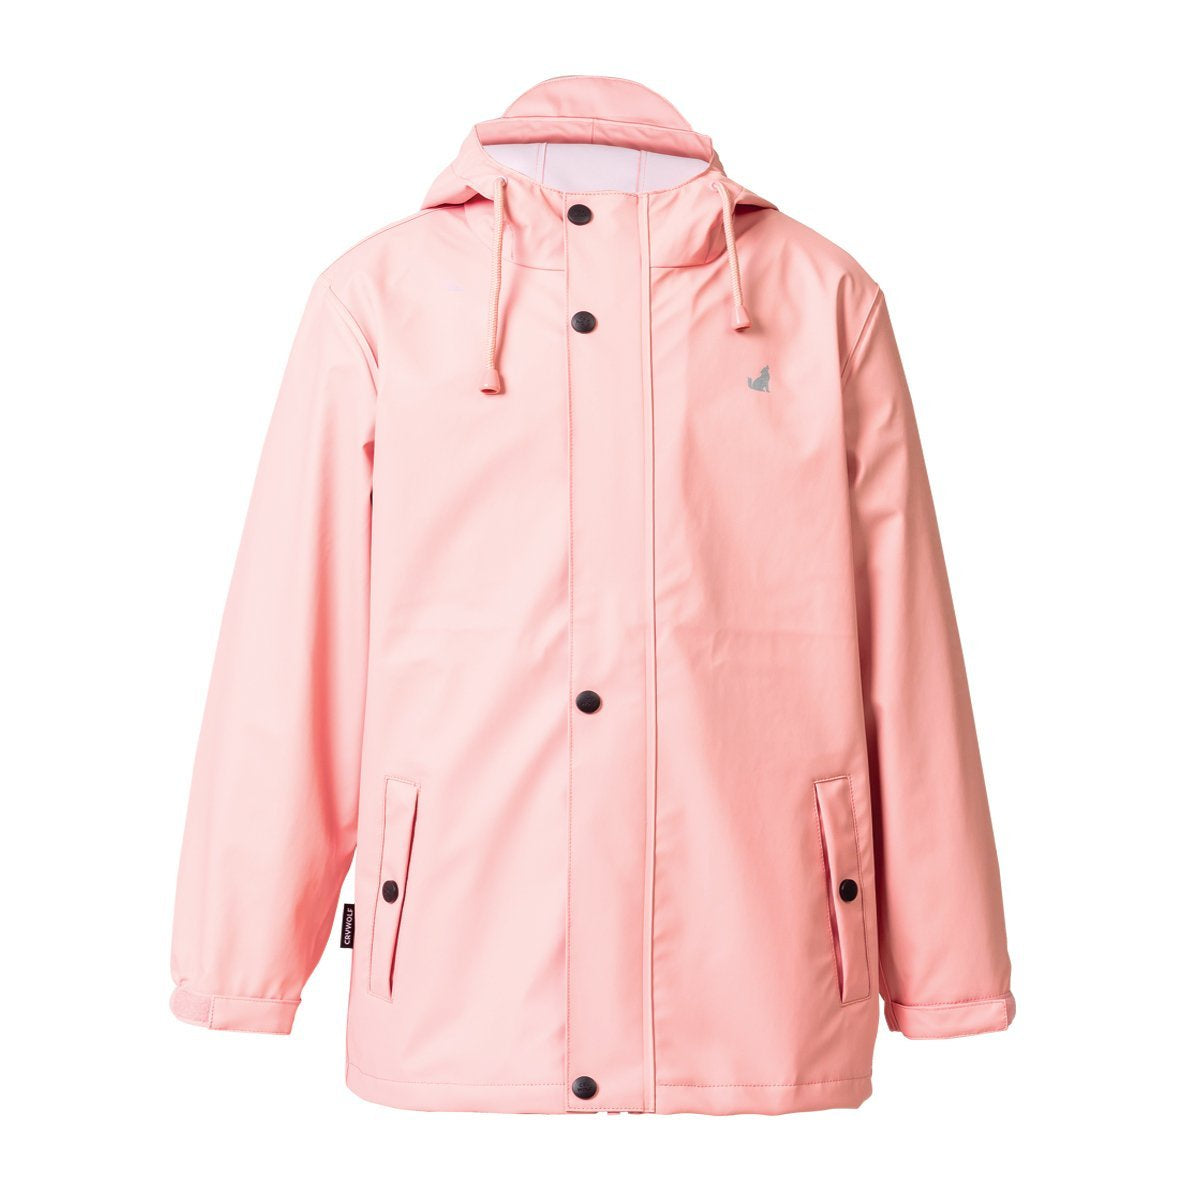 waterproof kids jacket pink front